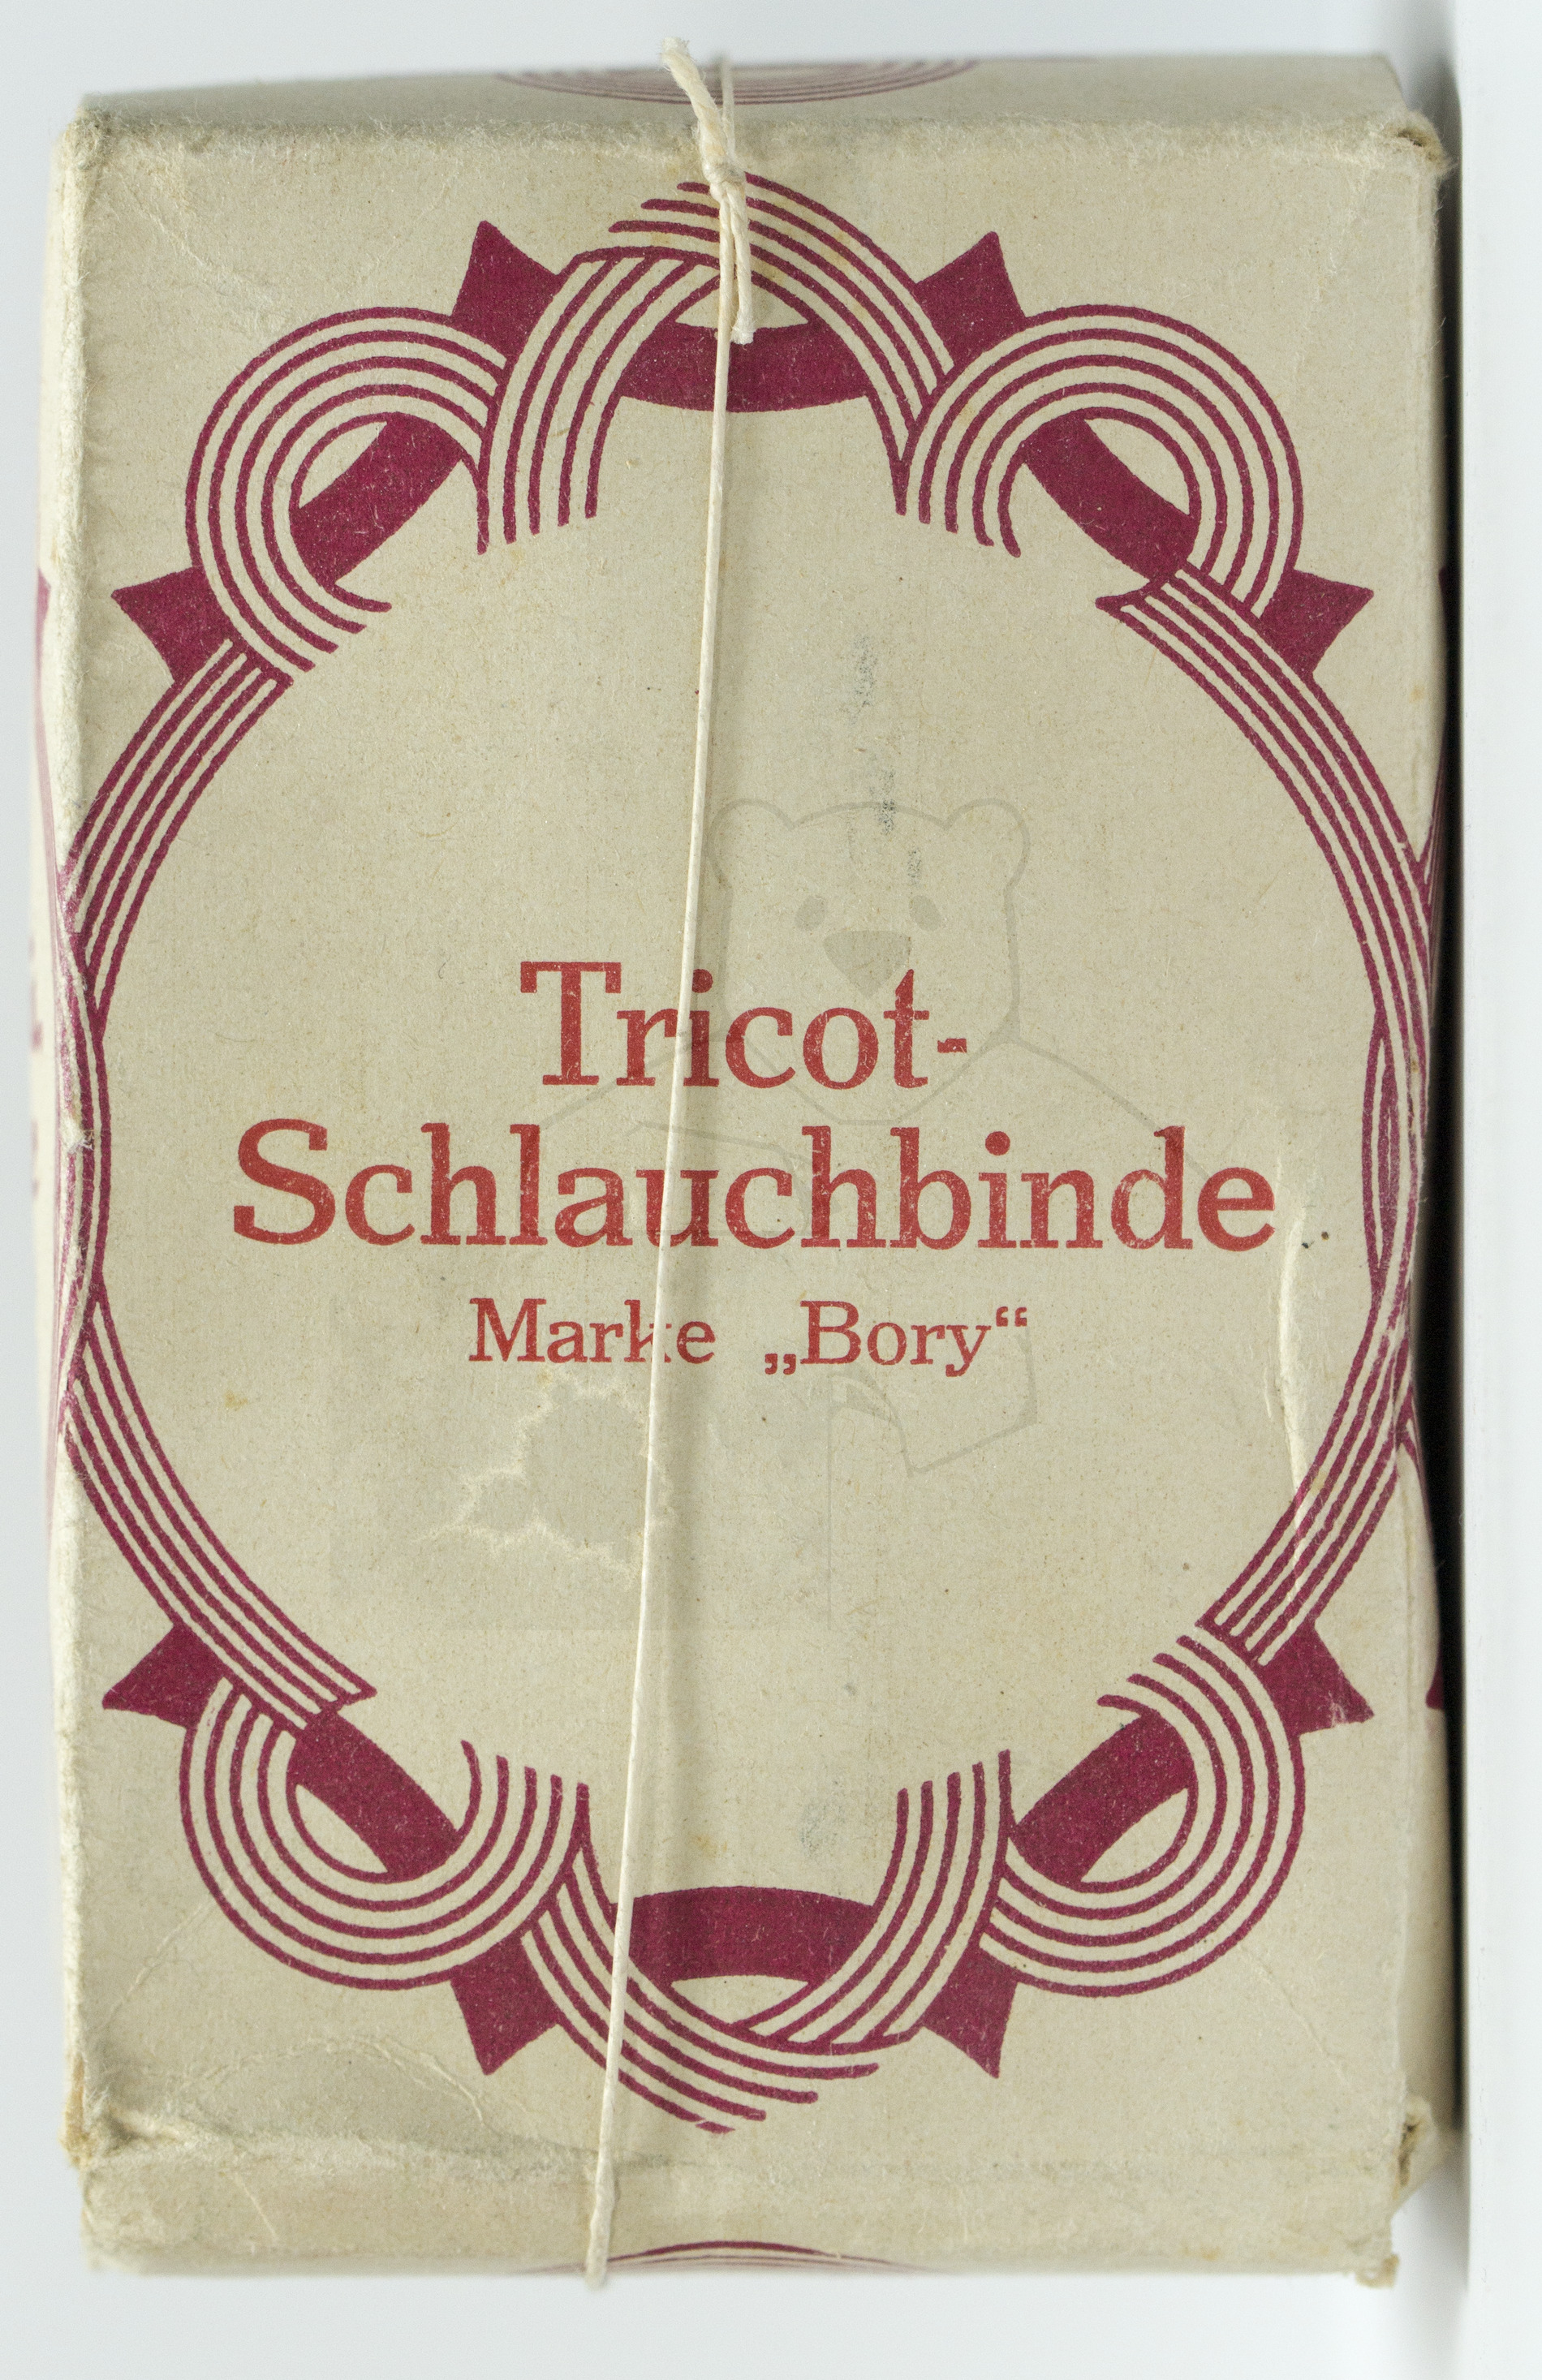 Tricot Schlauchbinde Marke "Bory"